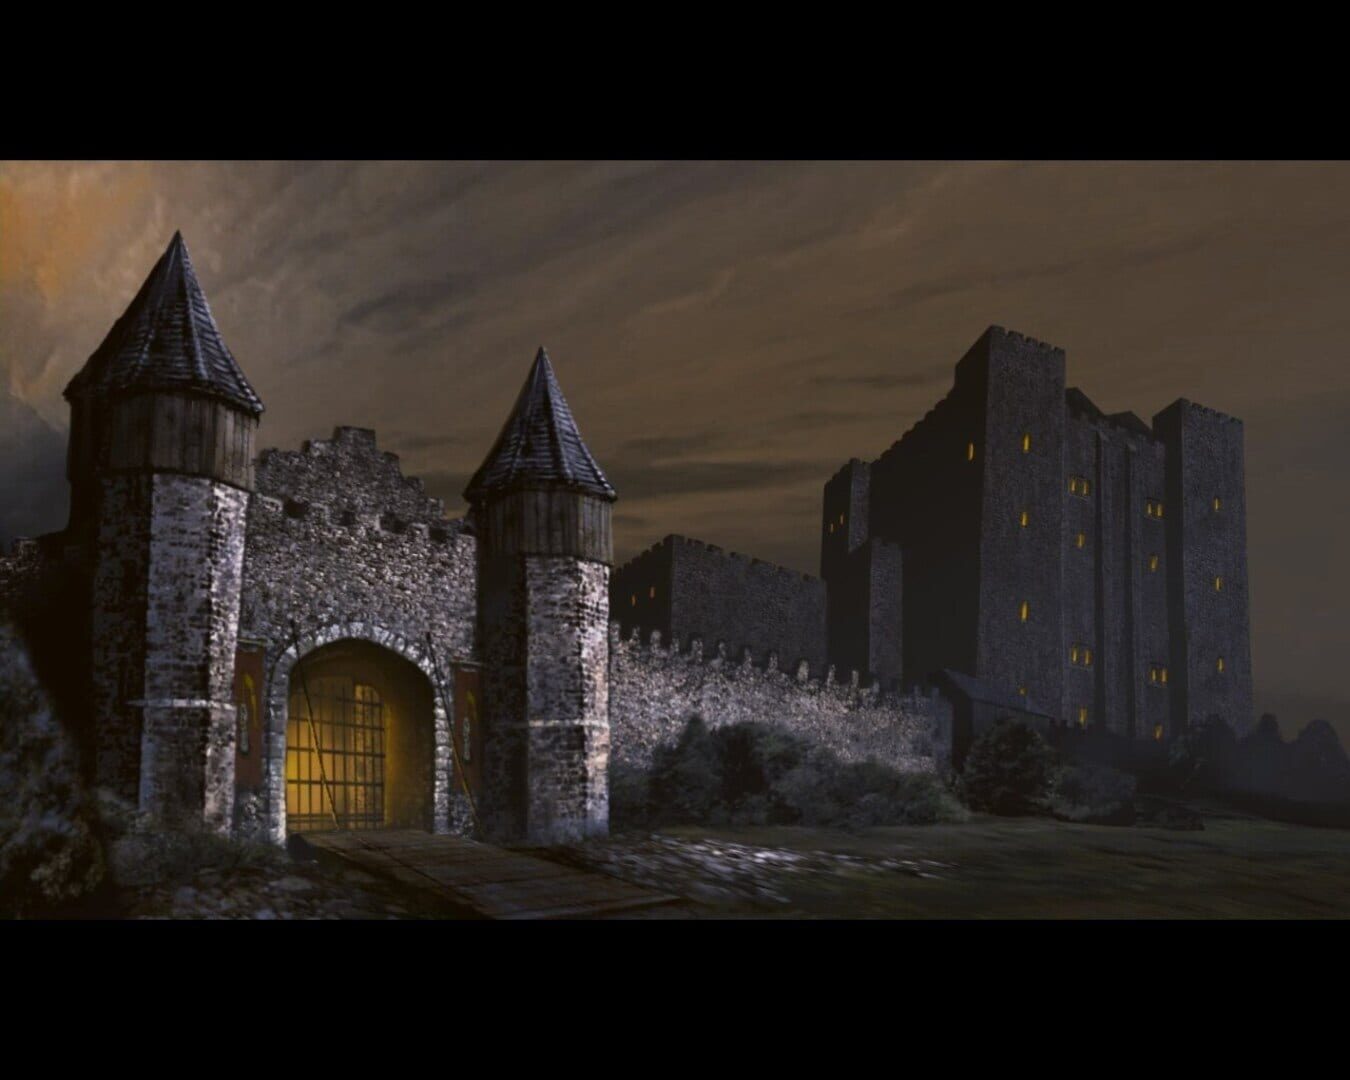 Baldur's Gate: Enhanced Edition screenshot